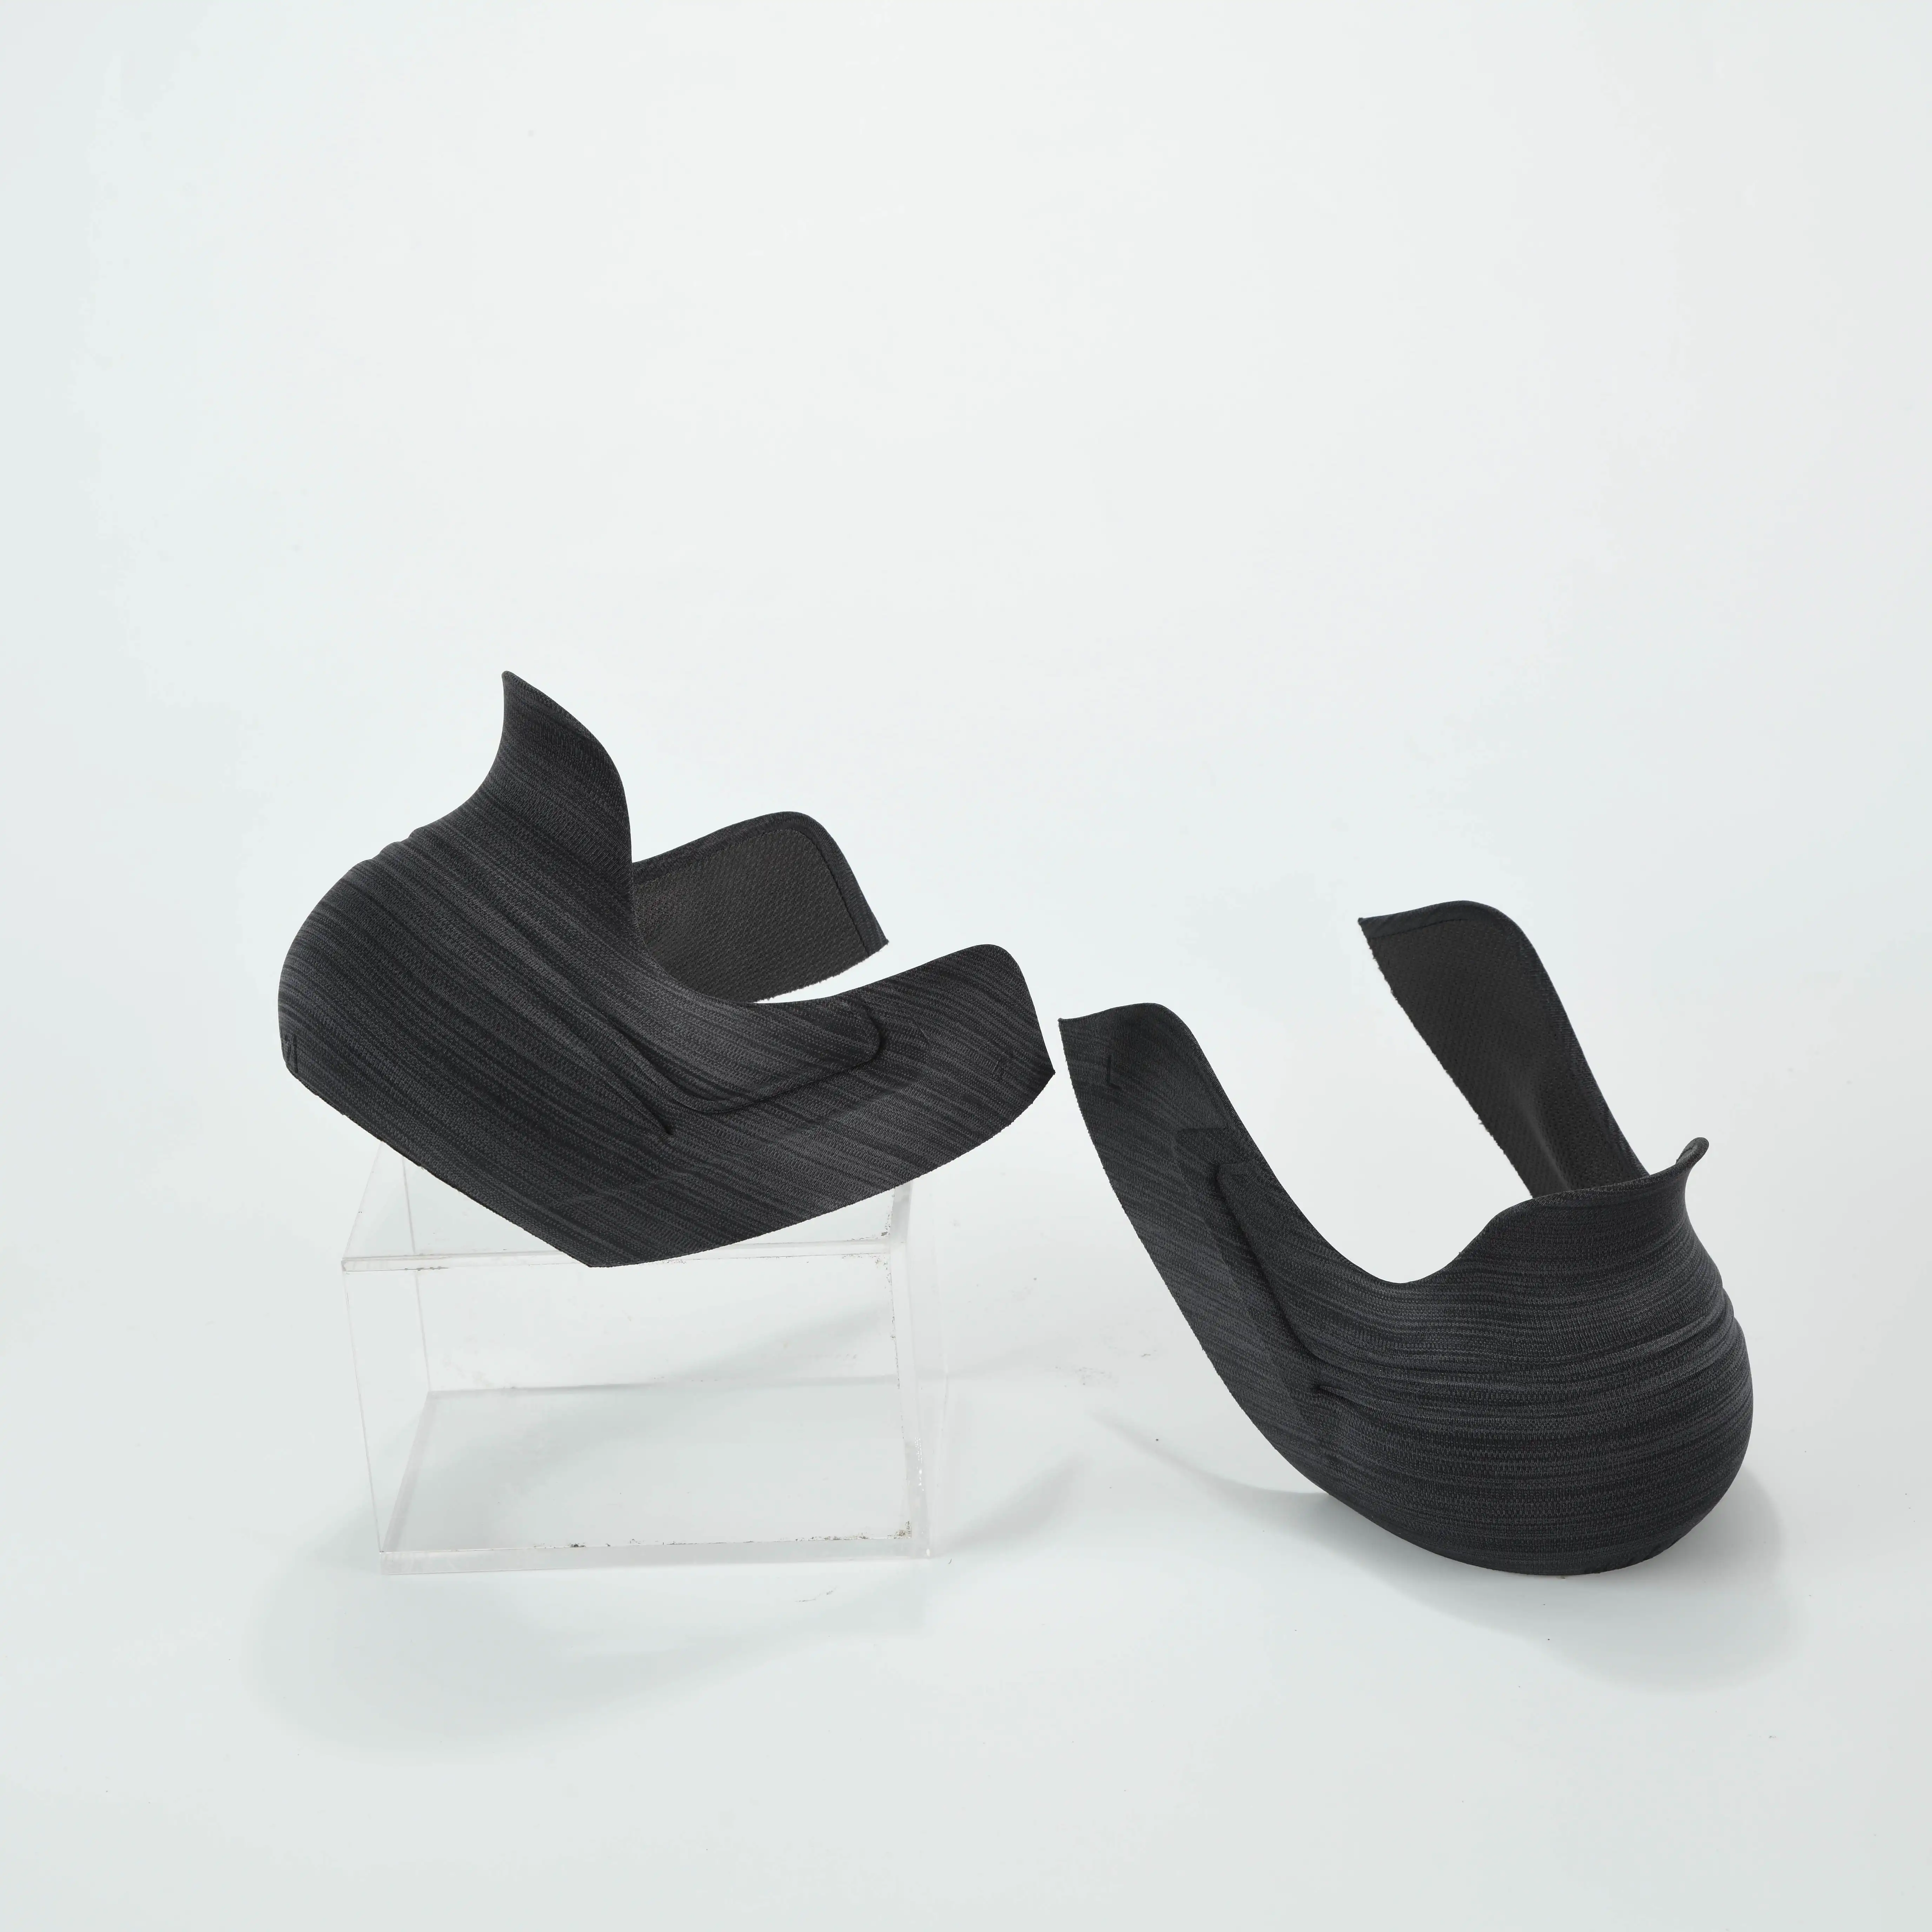 Contador de tacón de fútbol moldeado 3D de alta calidad para zapatos deportivos